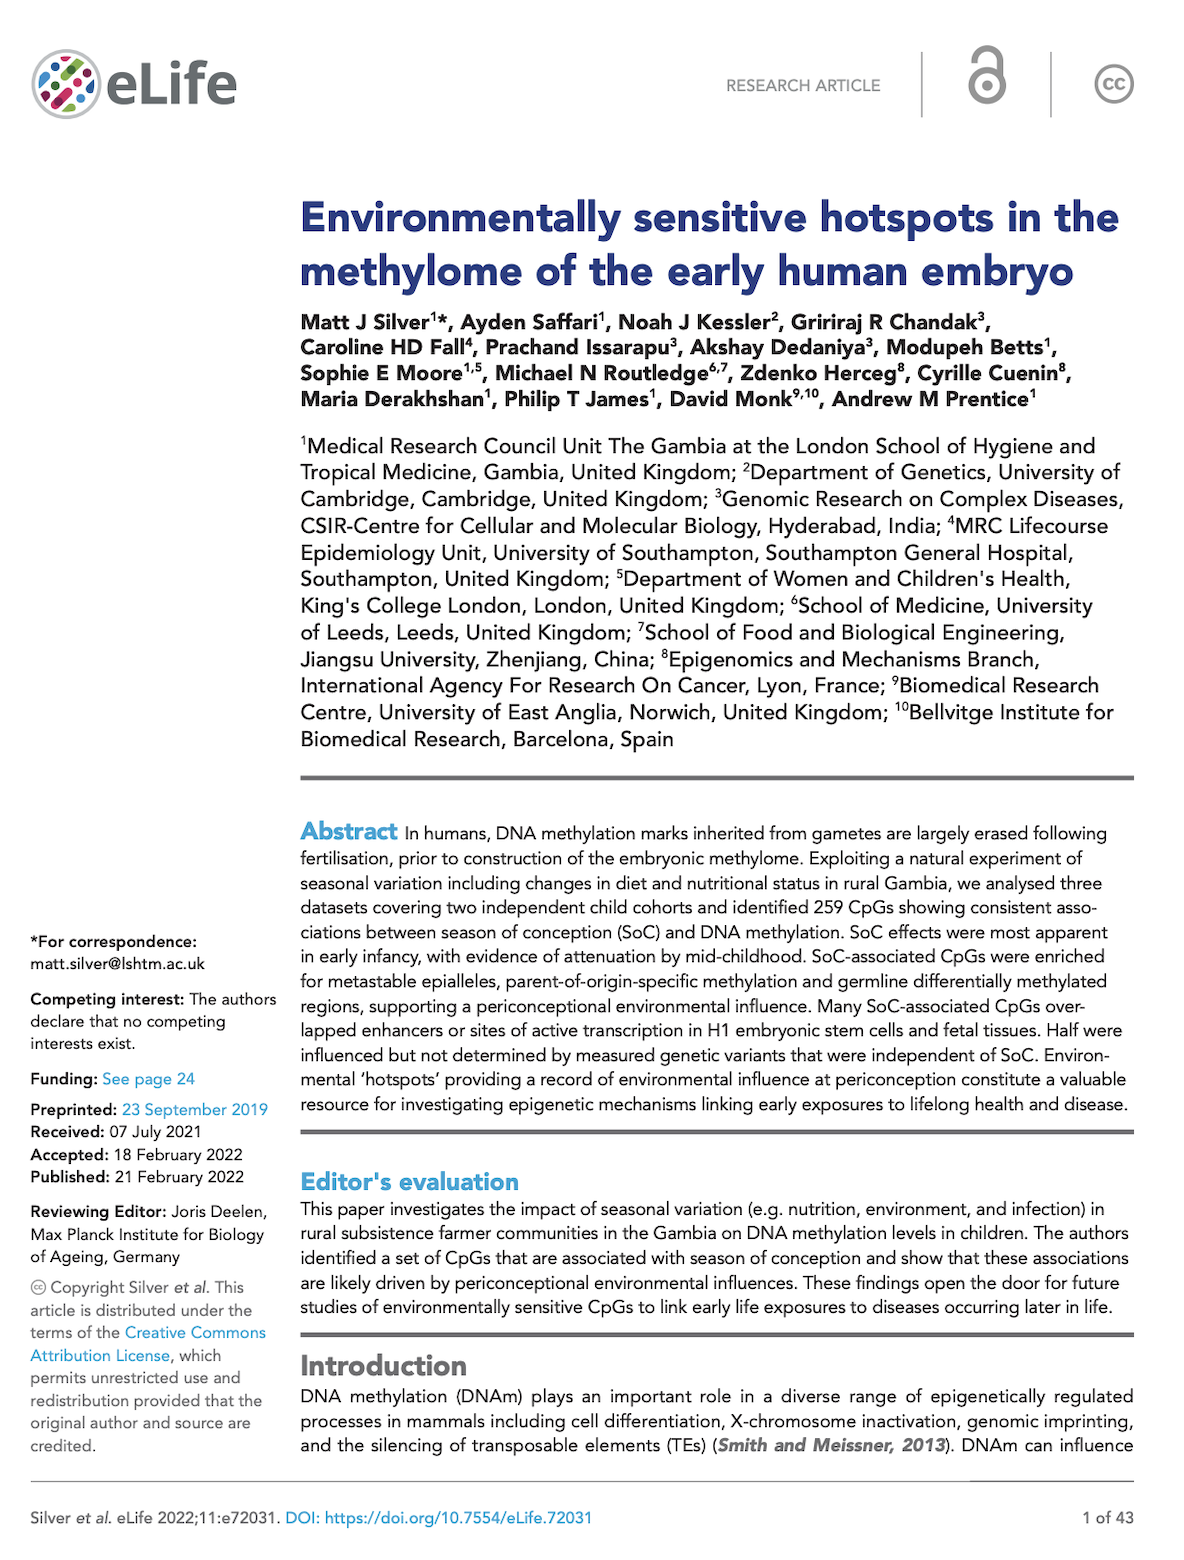 Silver, Matt J, et al. 'Environmentally sensitive hotspots in the methylome of the early human embryo.' Elife 11 (2022):e72031.